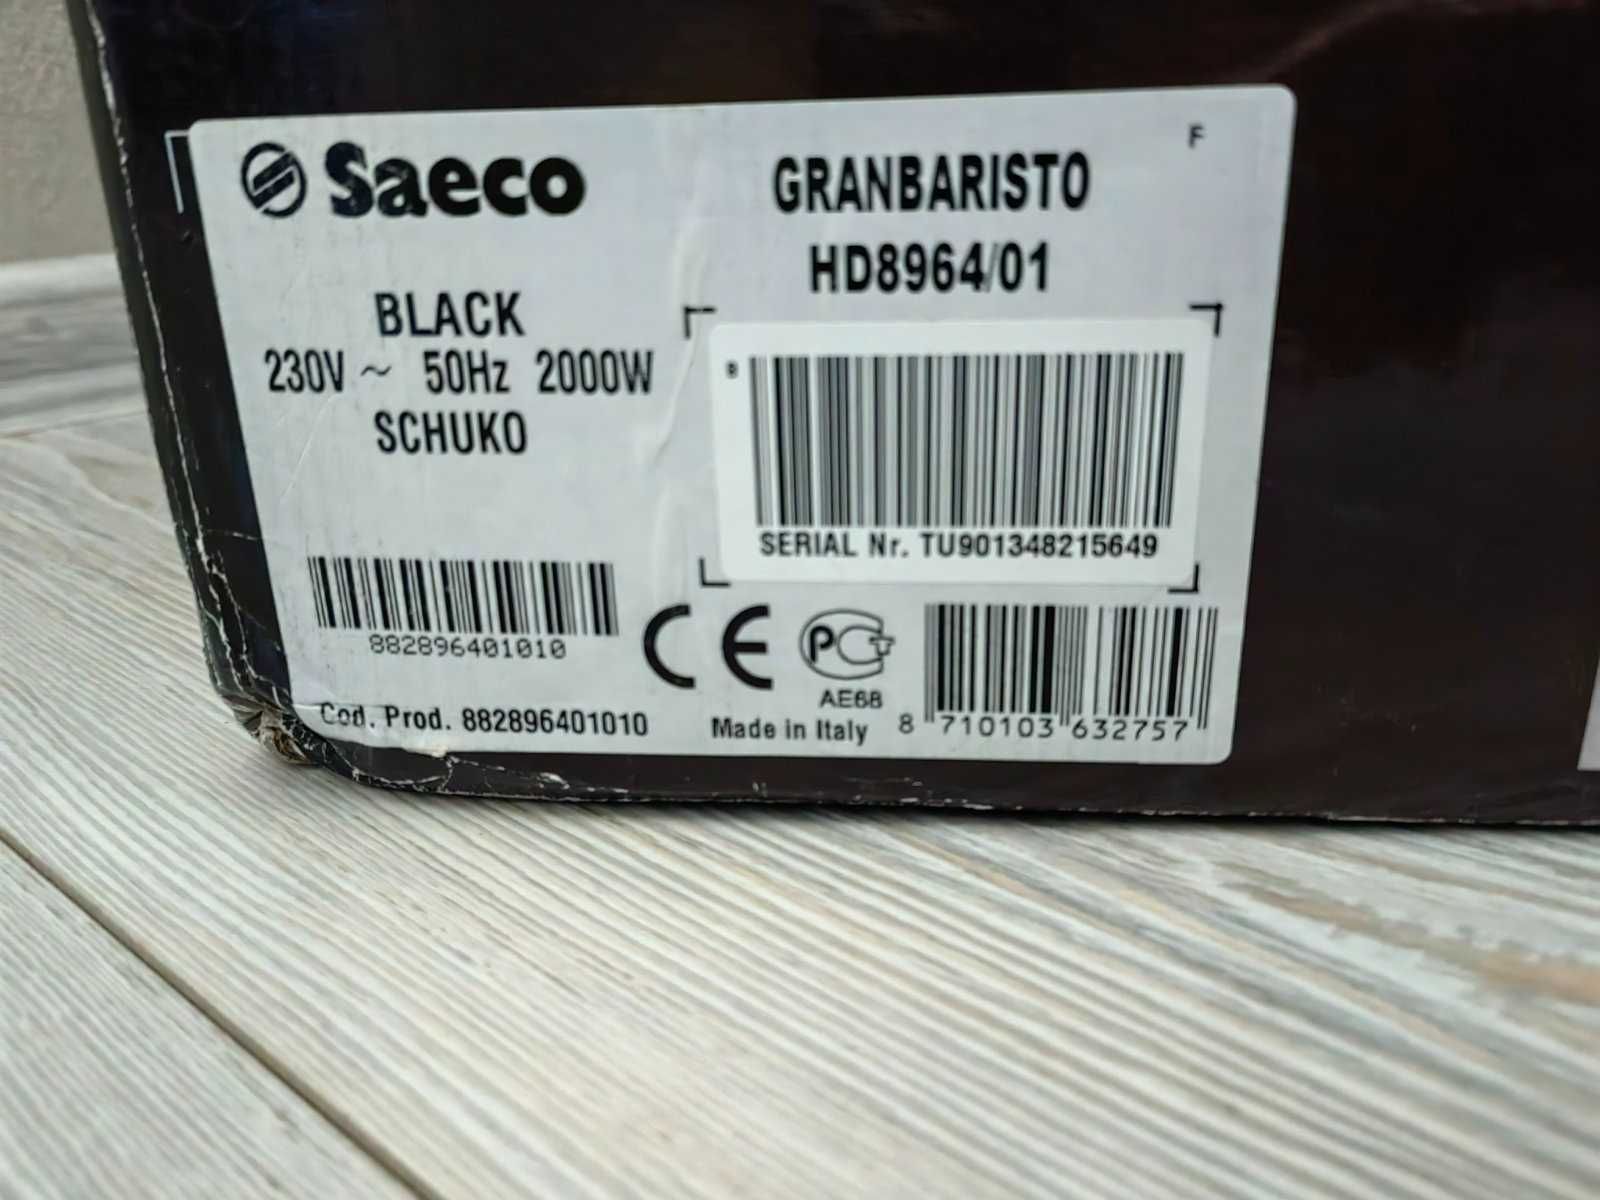 Saeco HD 8956 pico granbaristo - в кашон , за подарък